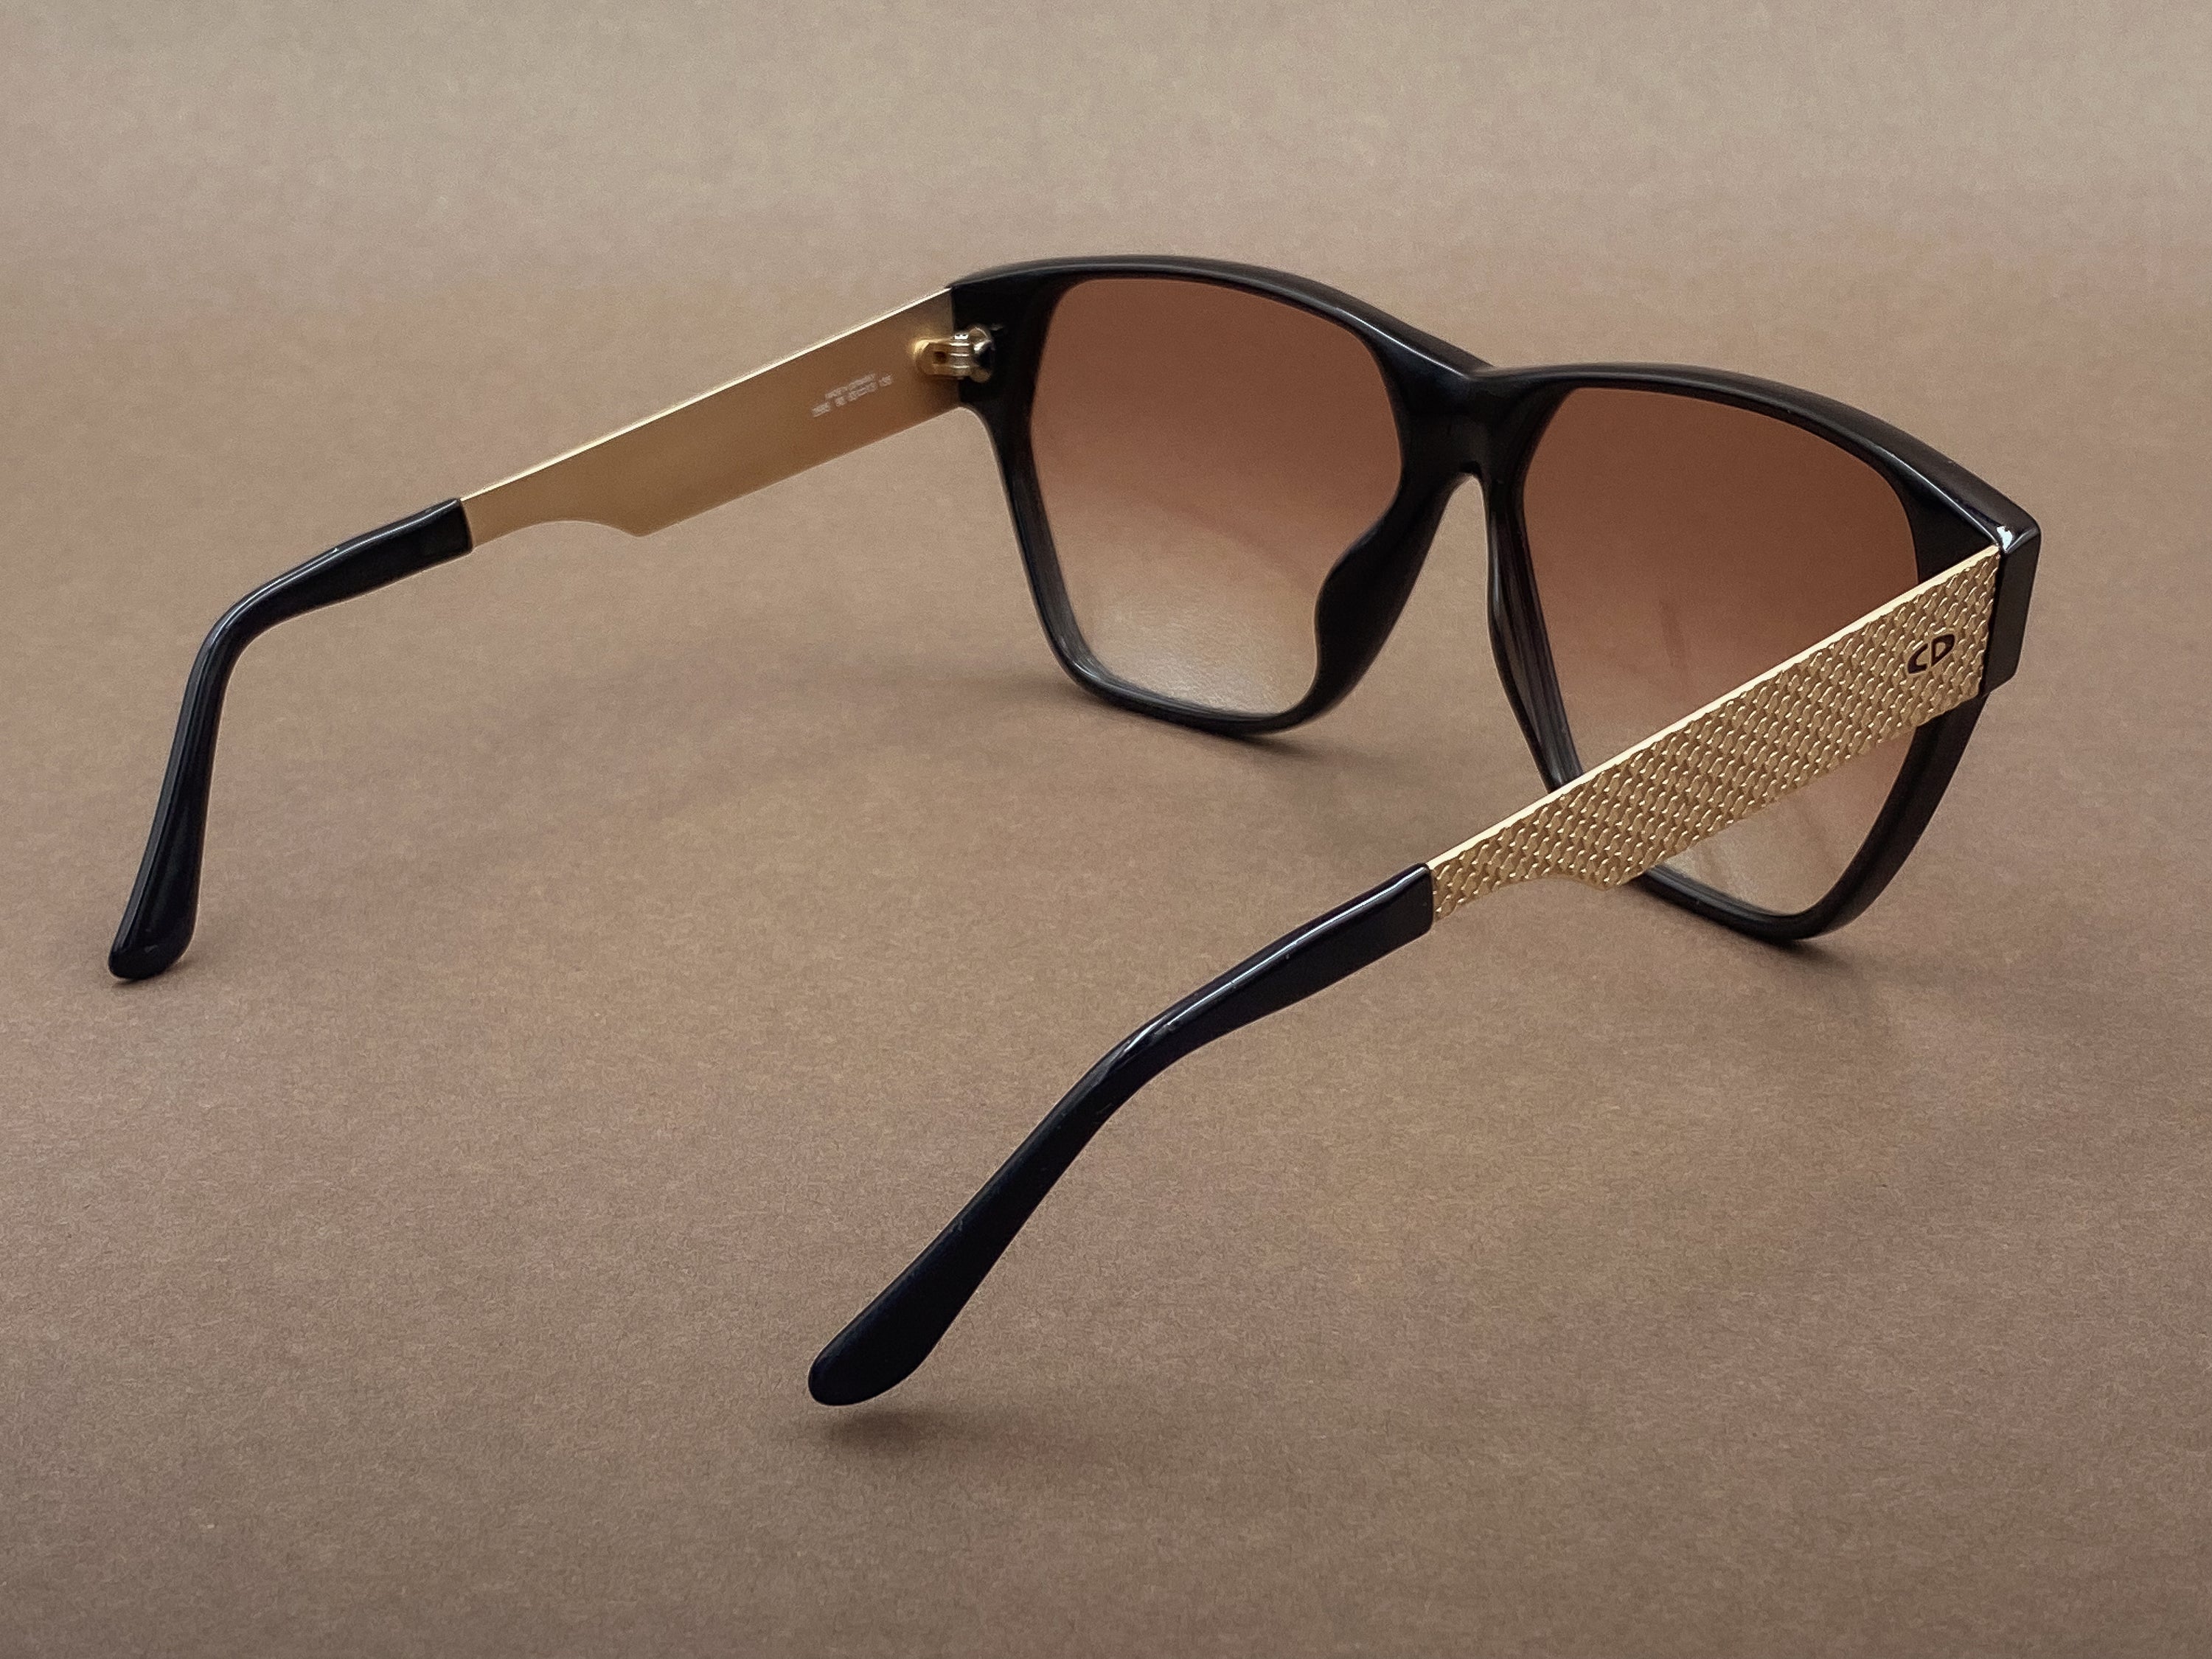 Christian Dior 2565 sunglasses